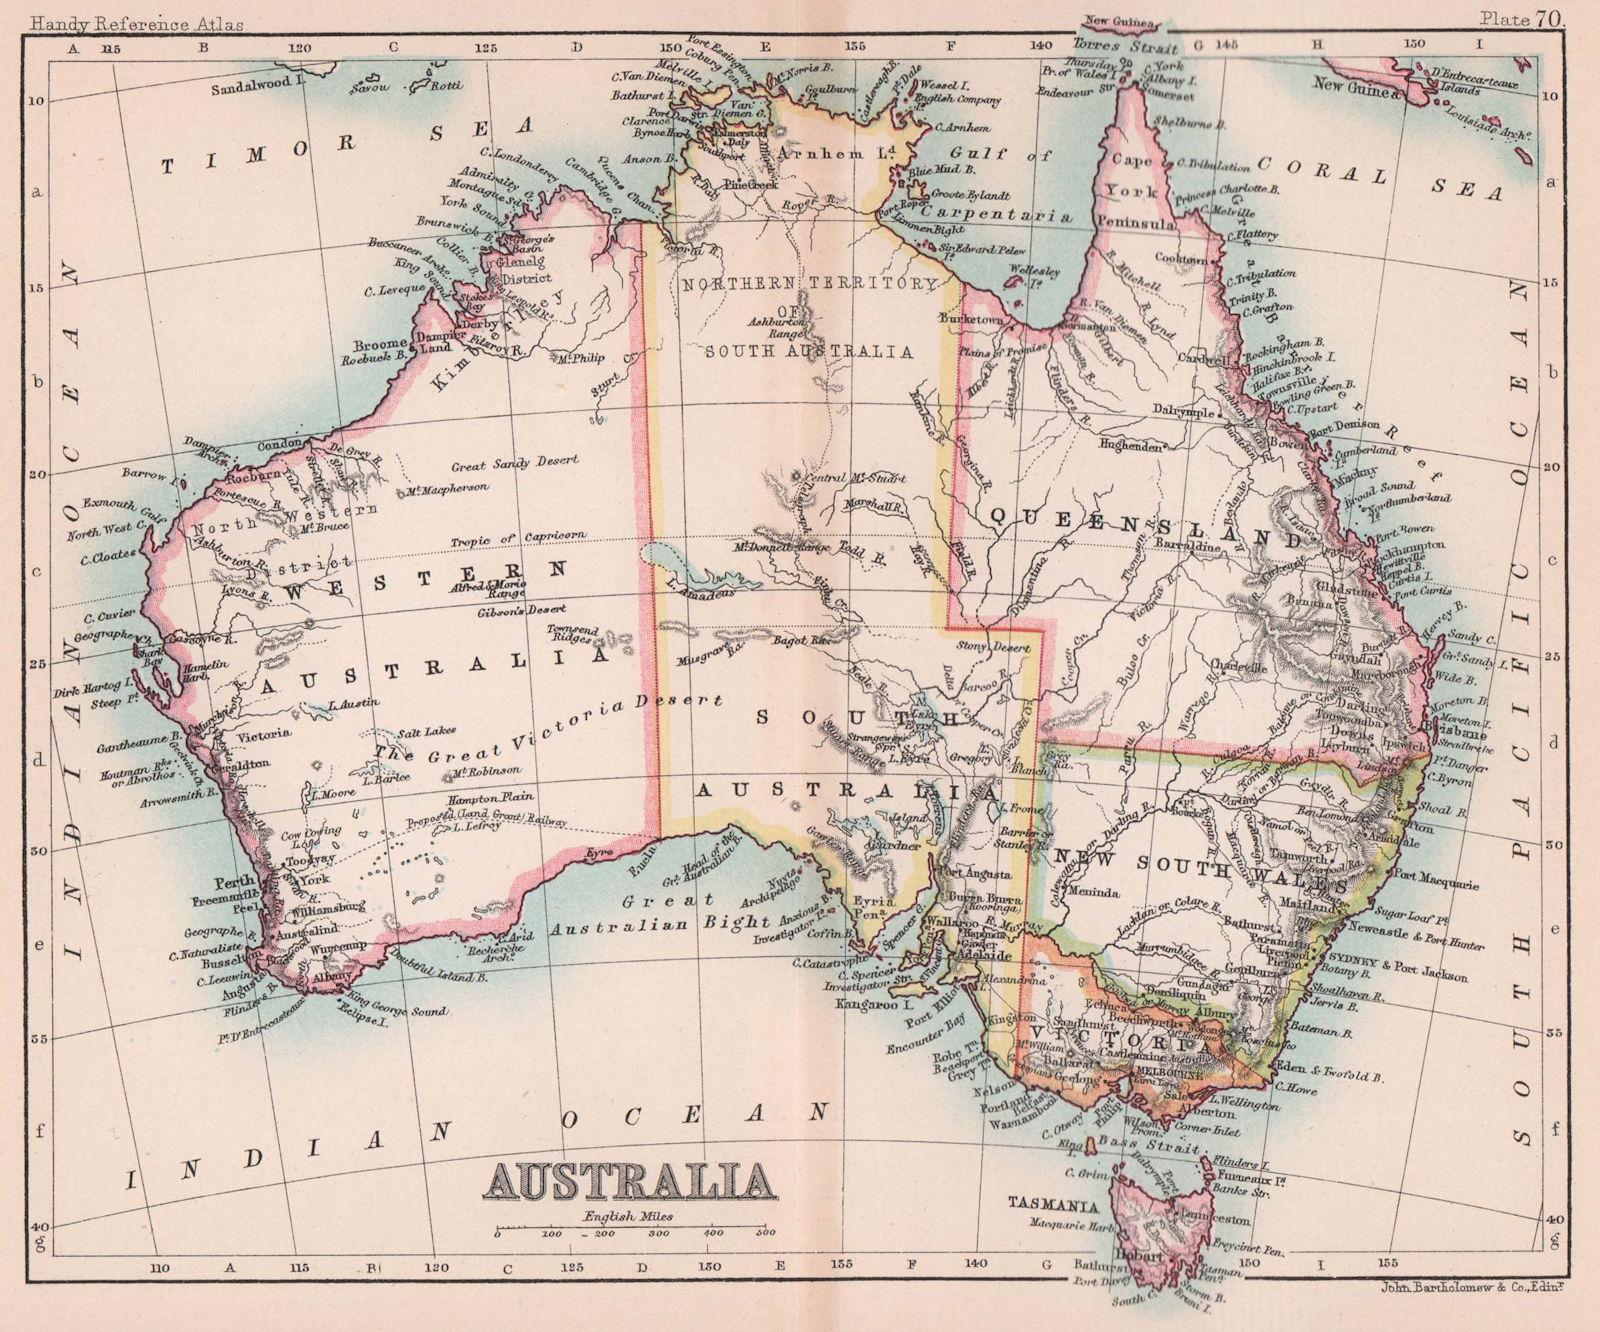 Associate Product Australia. Proposed Land Grant Railway. BARTHOLOMEW 1893 old antique map chart